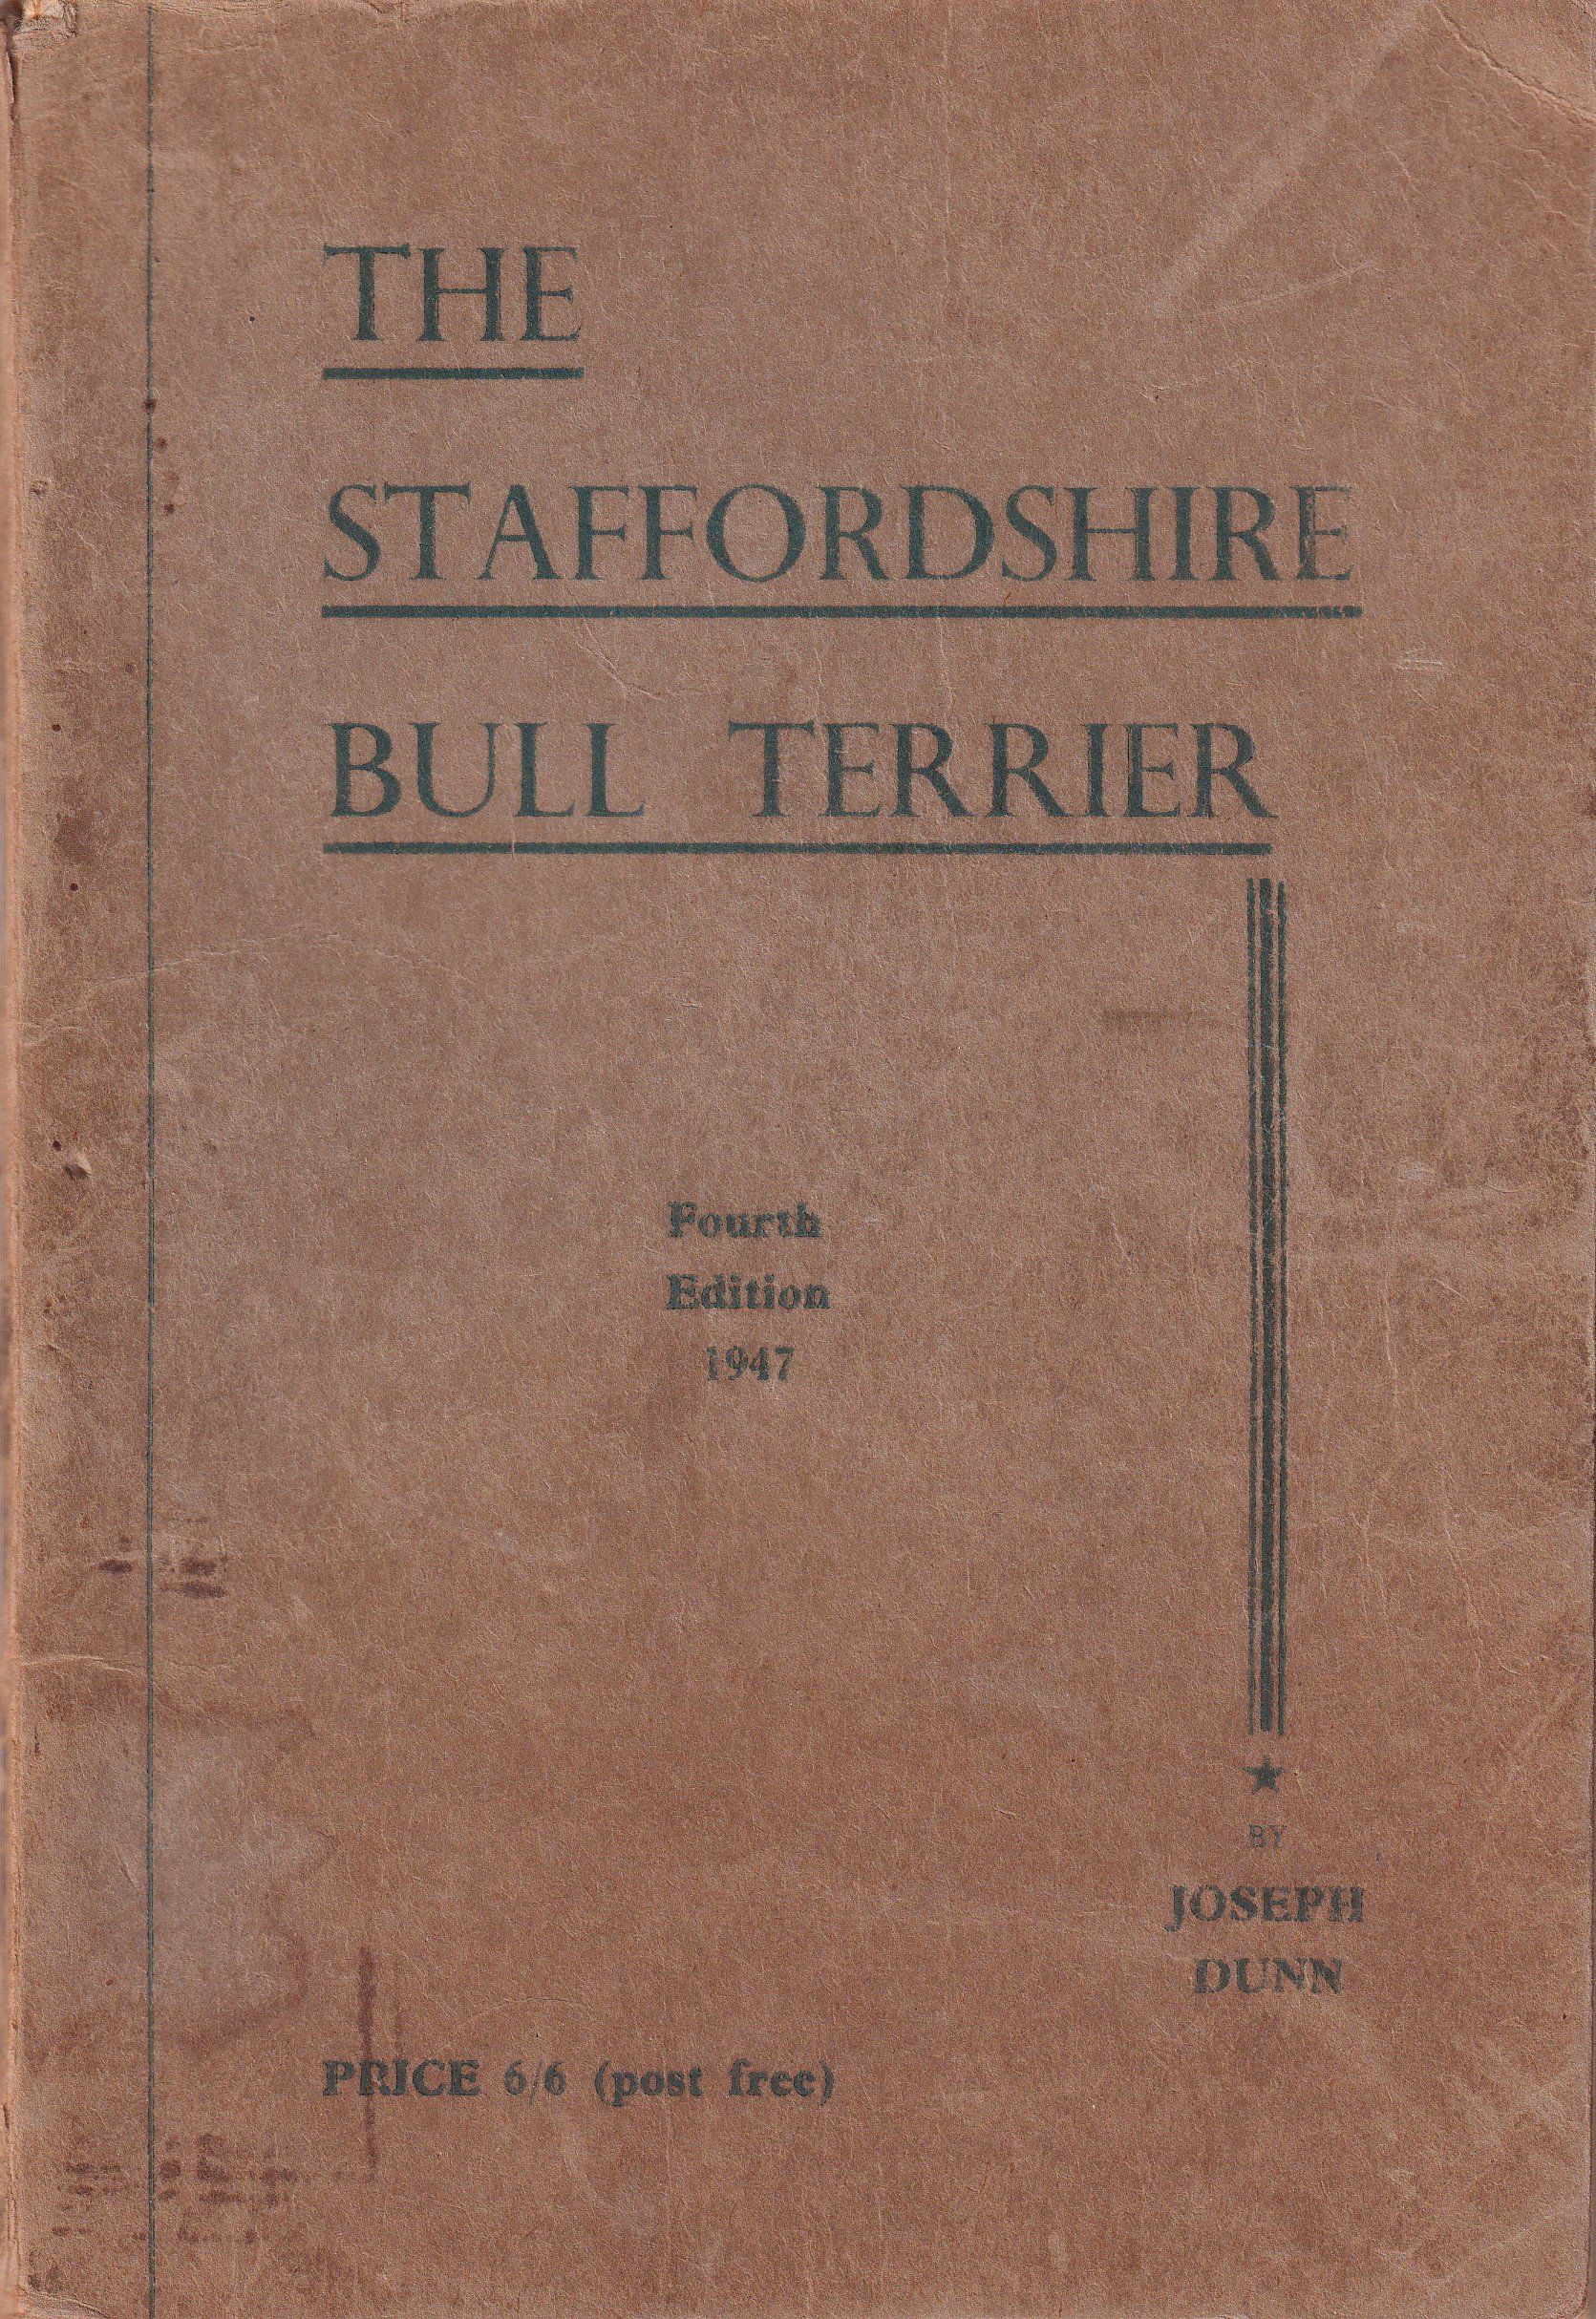 The Staffordshire Bull Terrier by Joseph Dunn